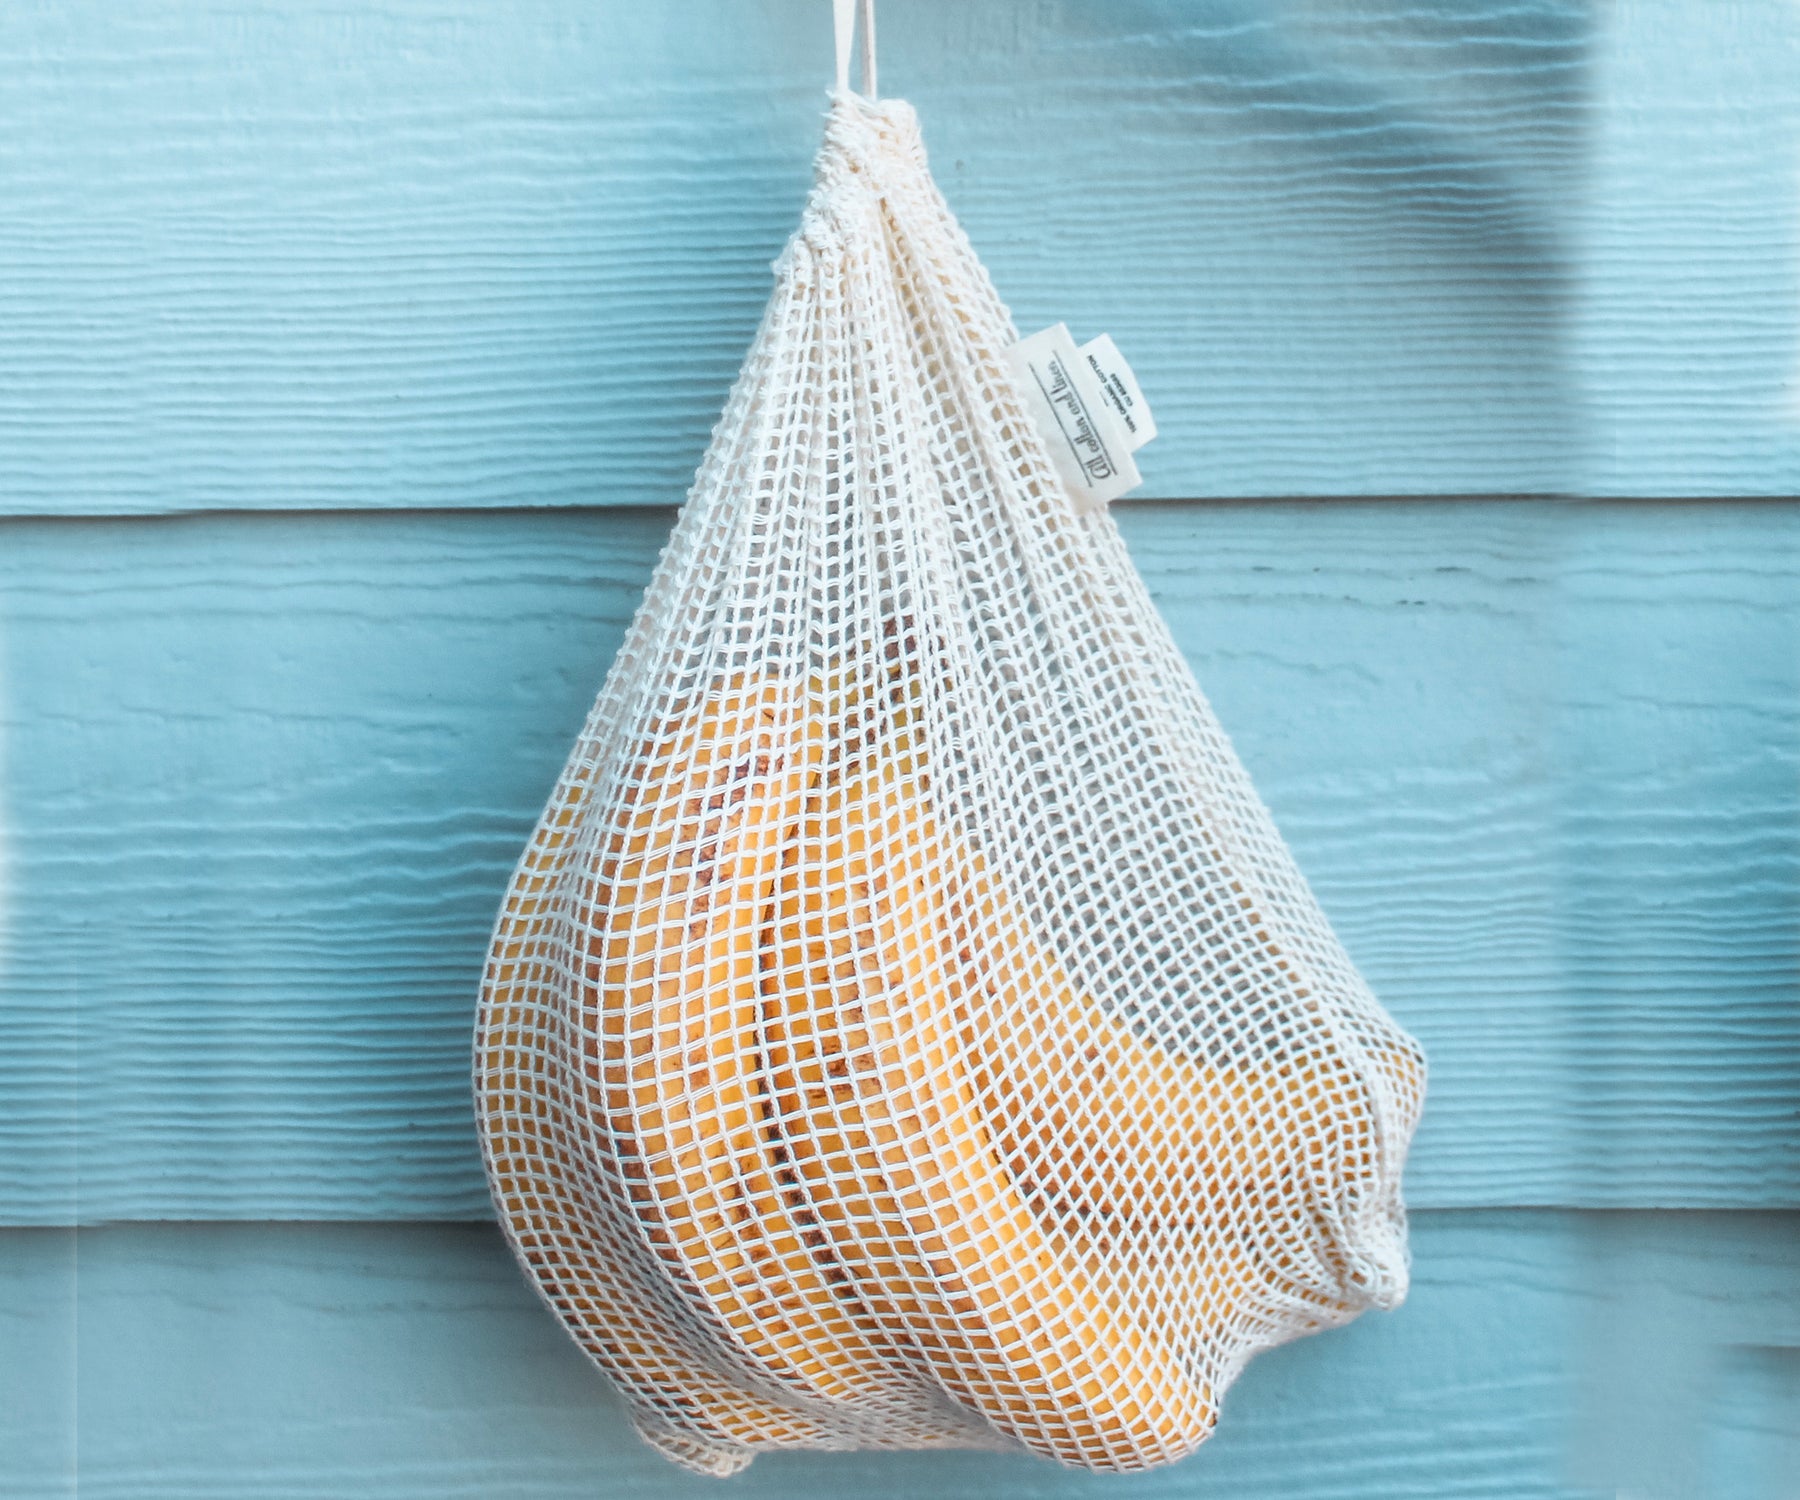 Bananas stored neatly in a reusable mesh produce bag